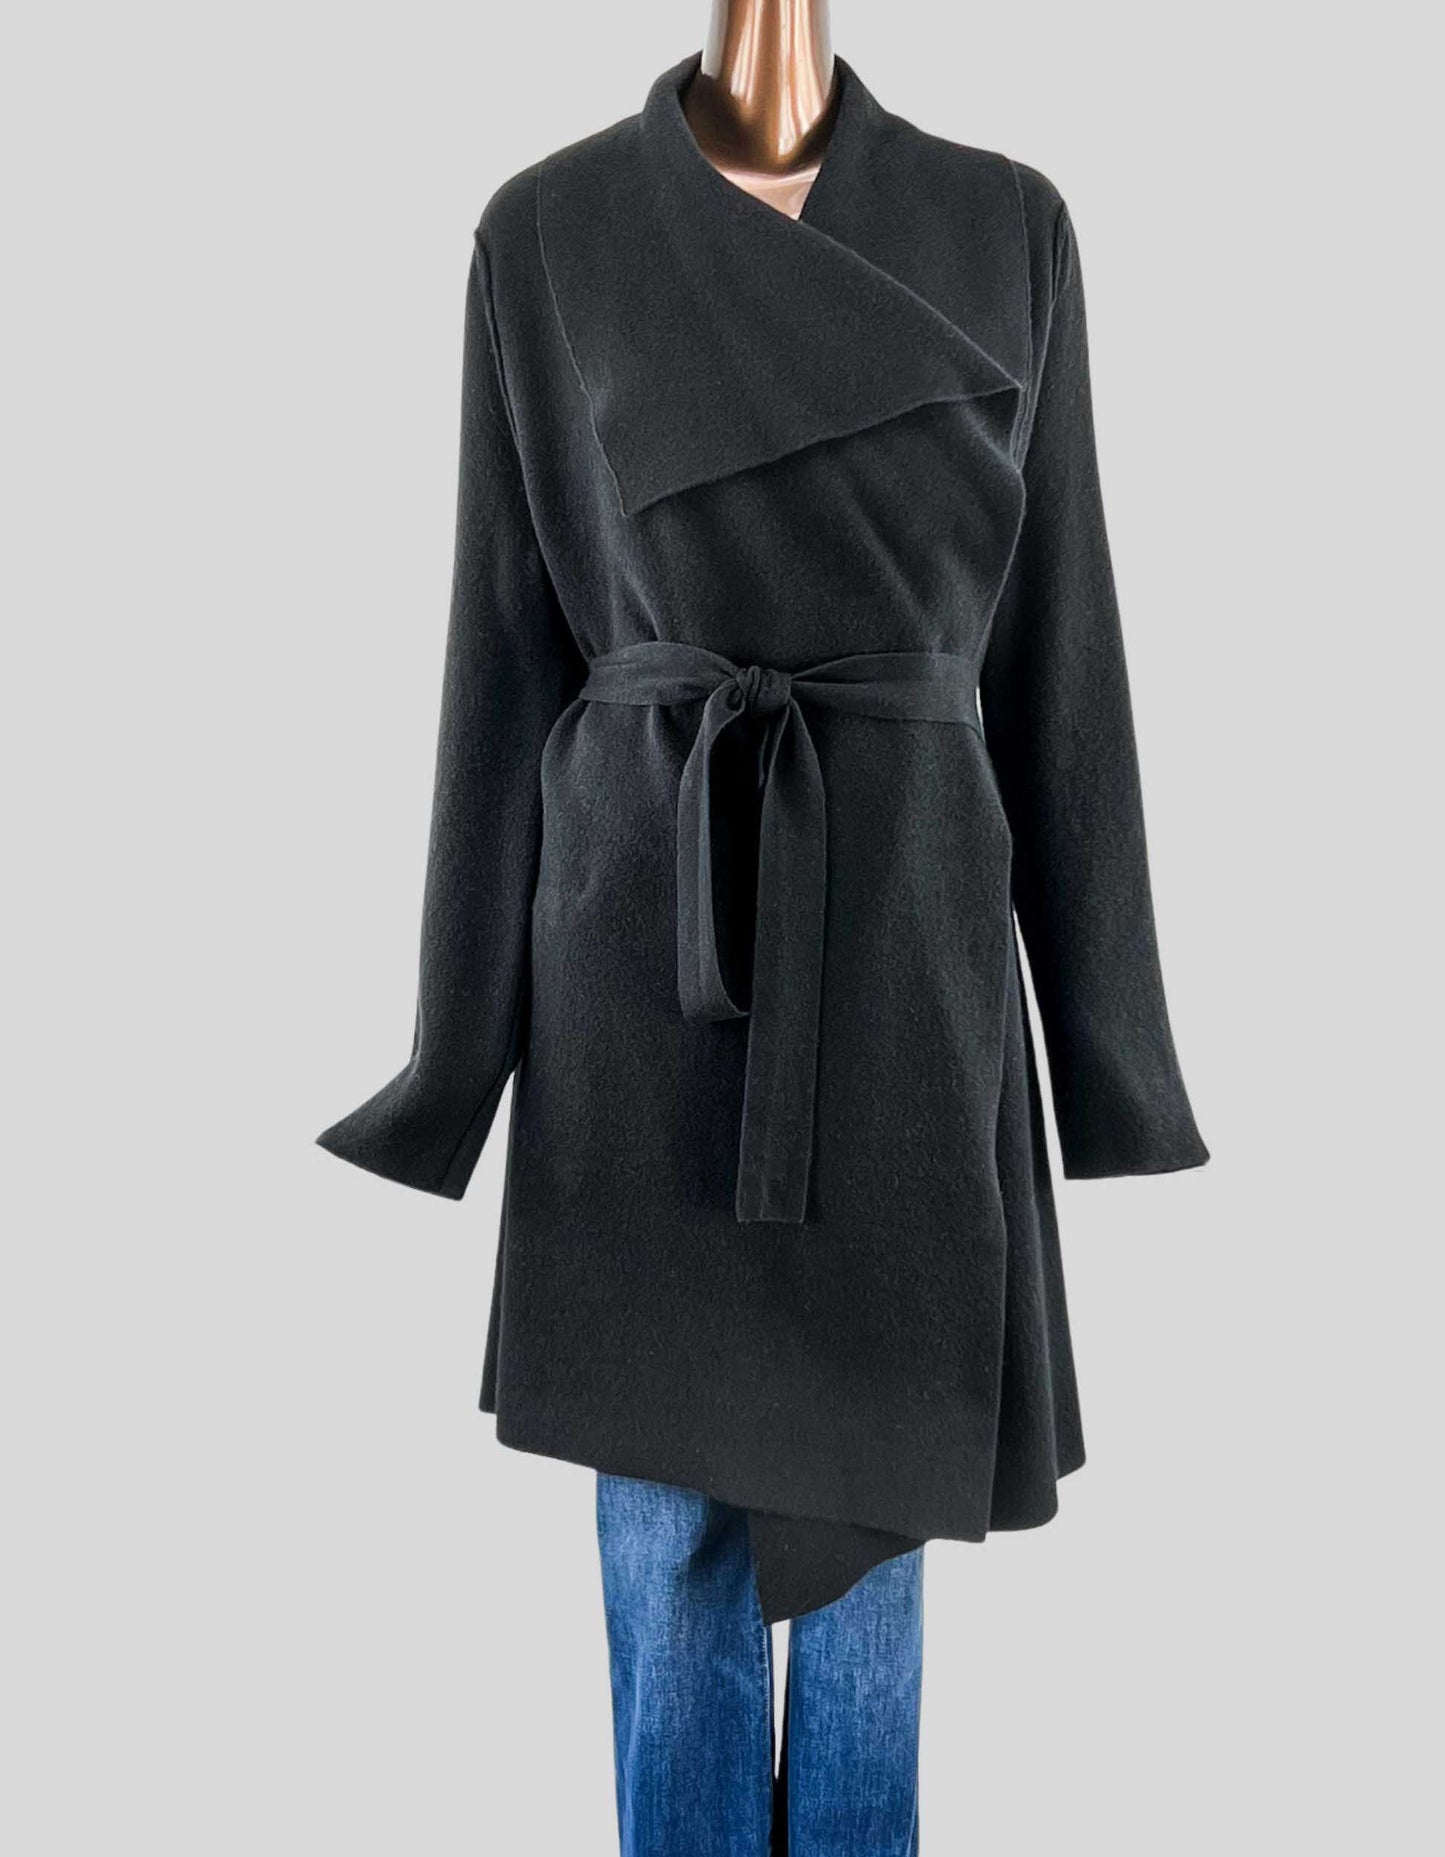 Cuyana Cashmere Wool Wrap Cardigan Coat - X-Small/Small